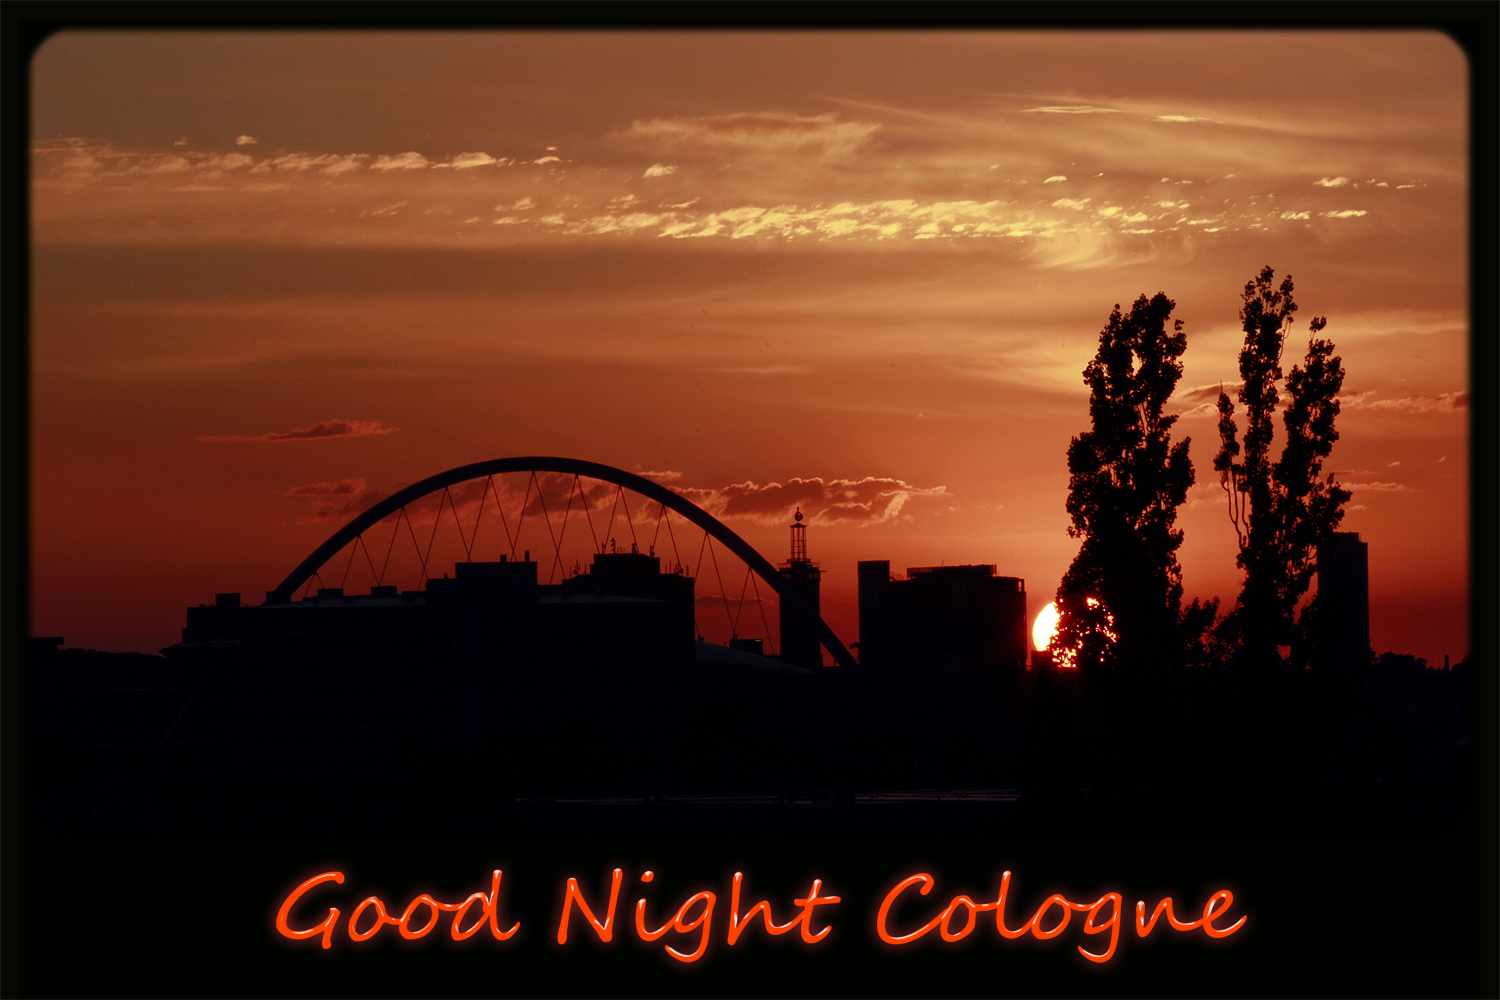 Good night cologne